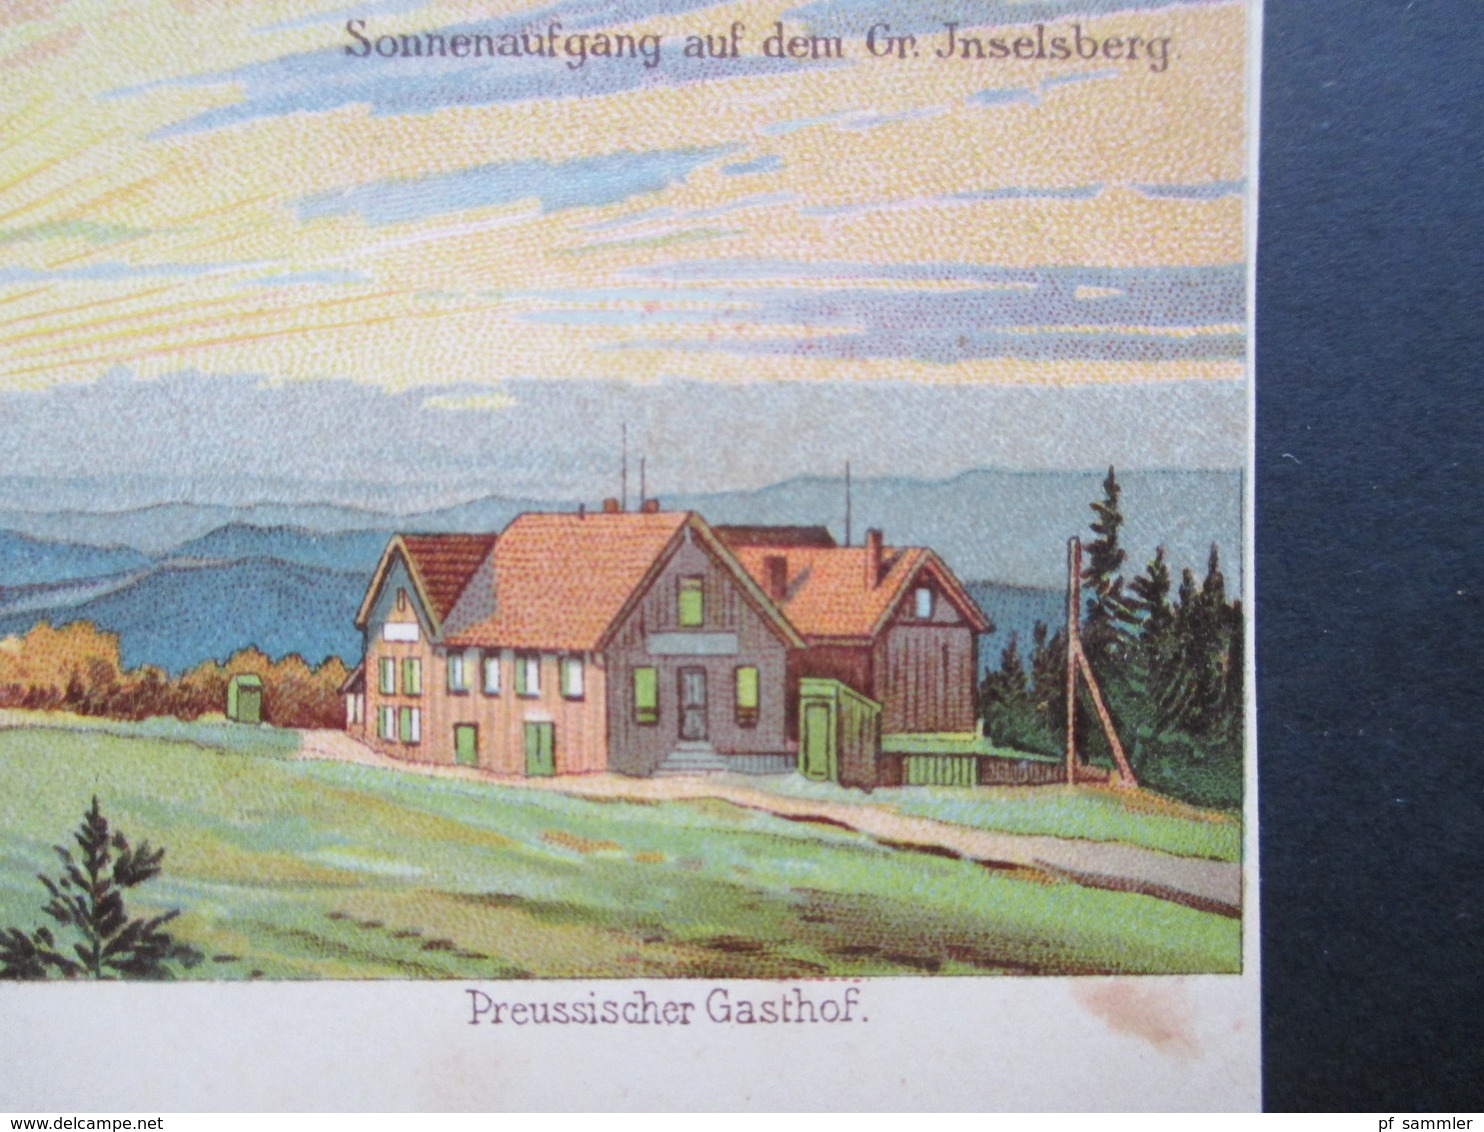 AK Litho Um 1900 Gruss Vom Grossen Inselsberg In Thüringen. Preussischer Gasthof. Sonnenaufgang - Greetings From...